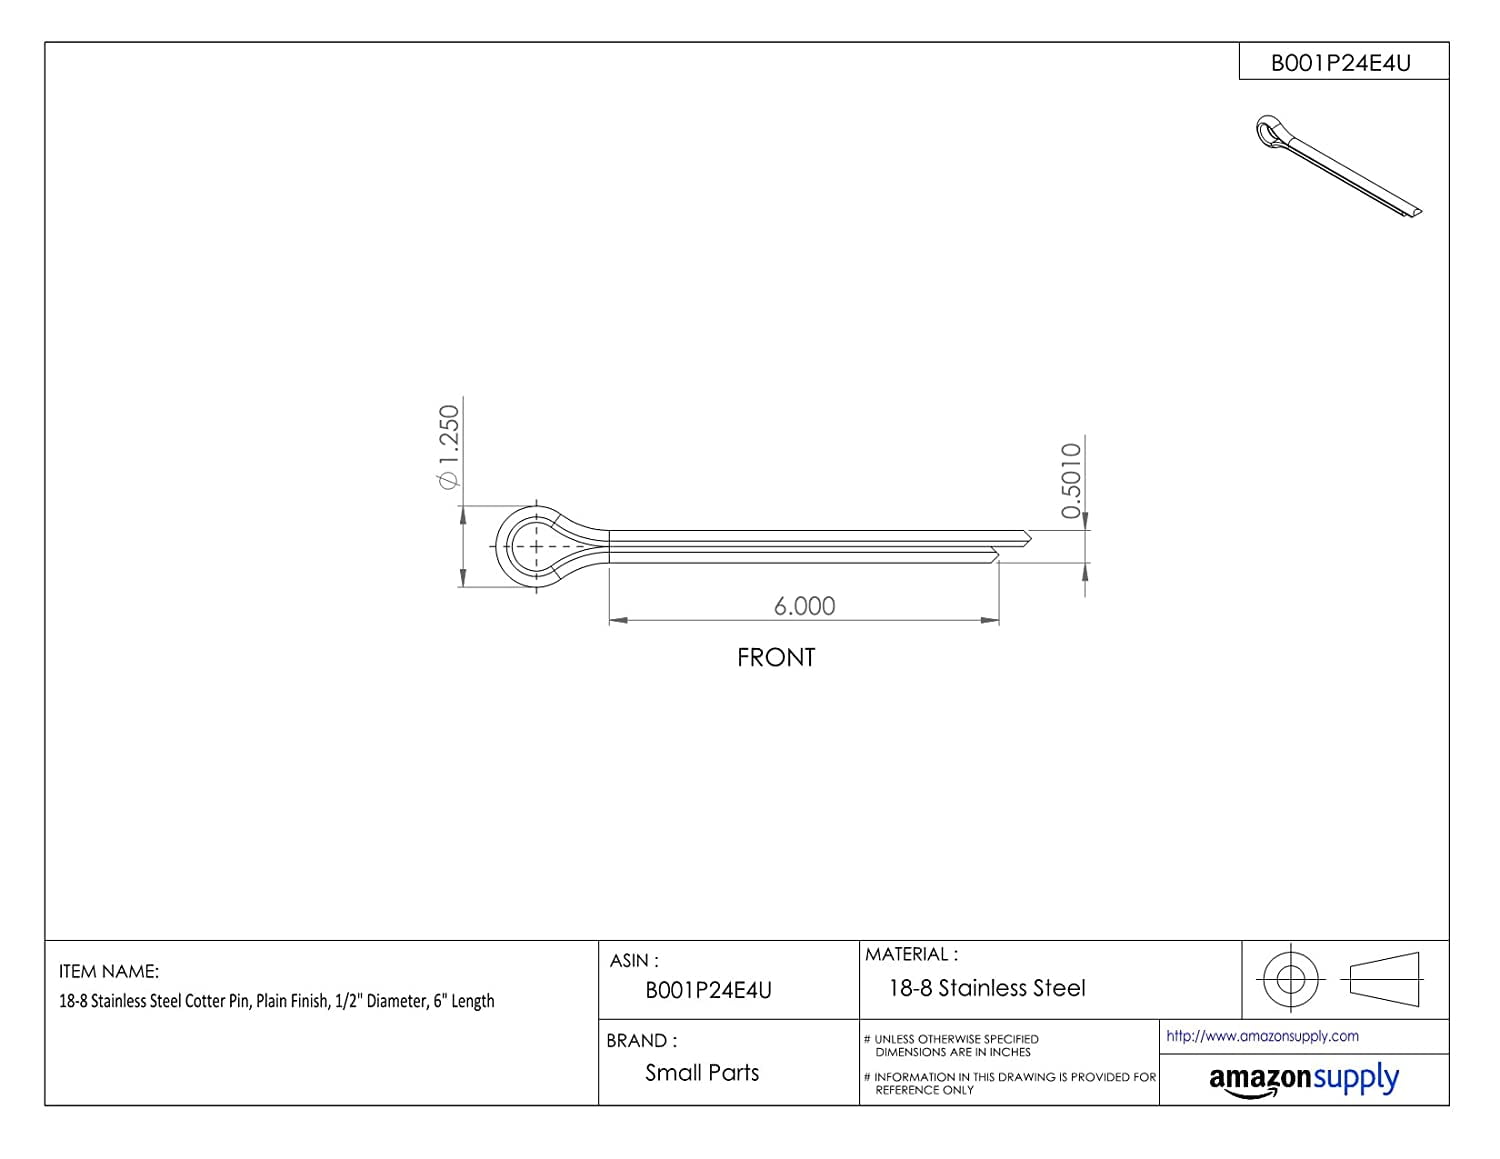 Pack of 25 18-8 Stainless Steel Cotter Pin 1/4 Diameter 1 Length Plain Finish 